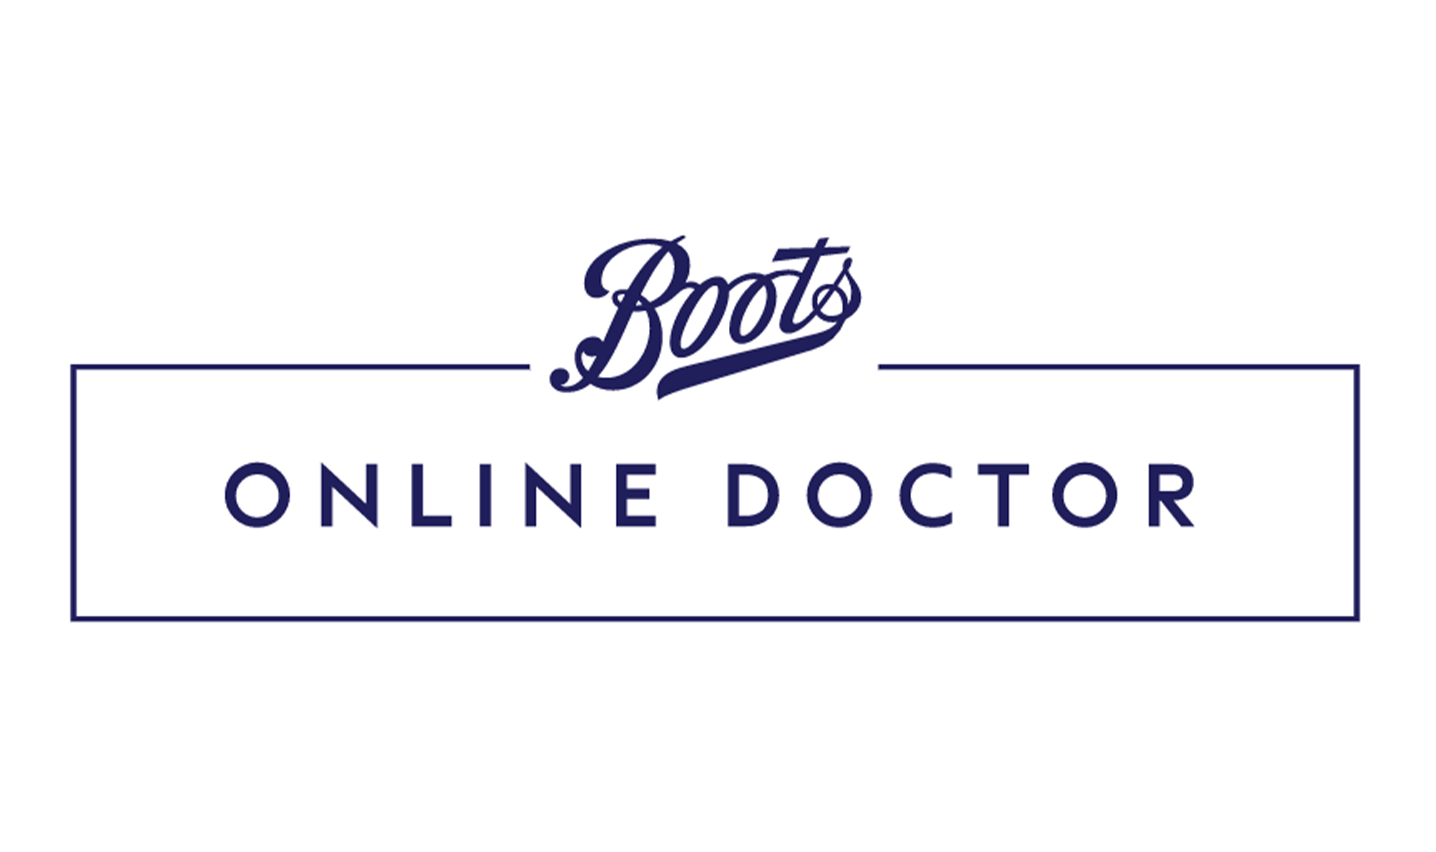 Boots online doctor logo